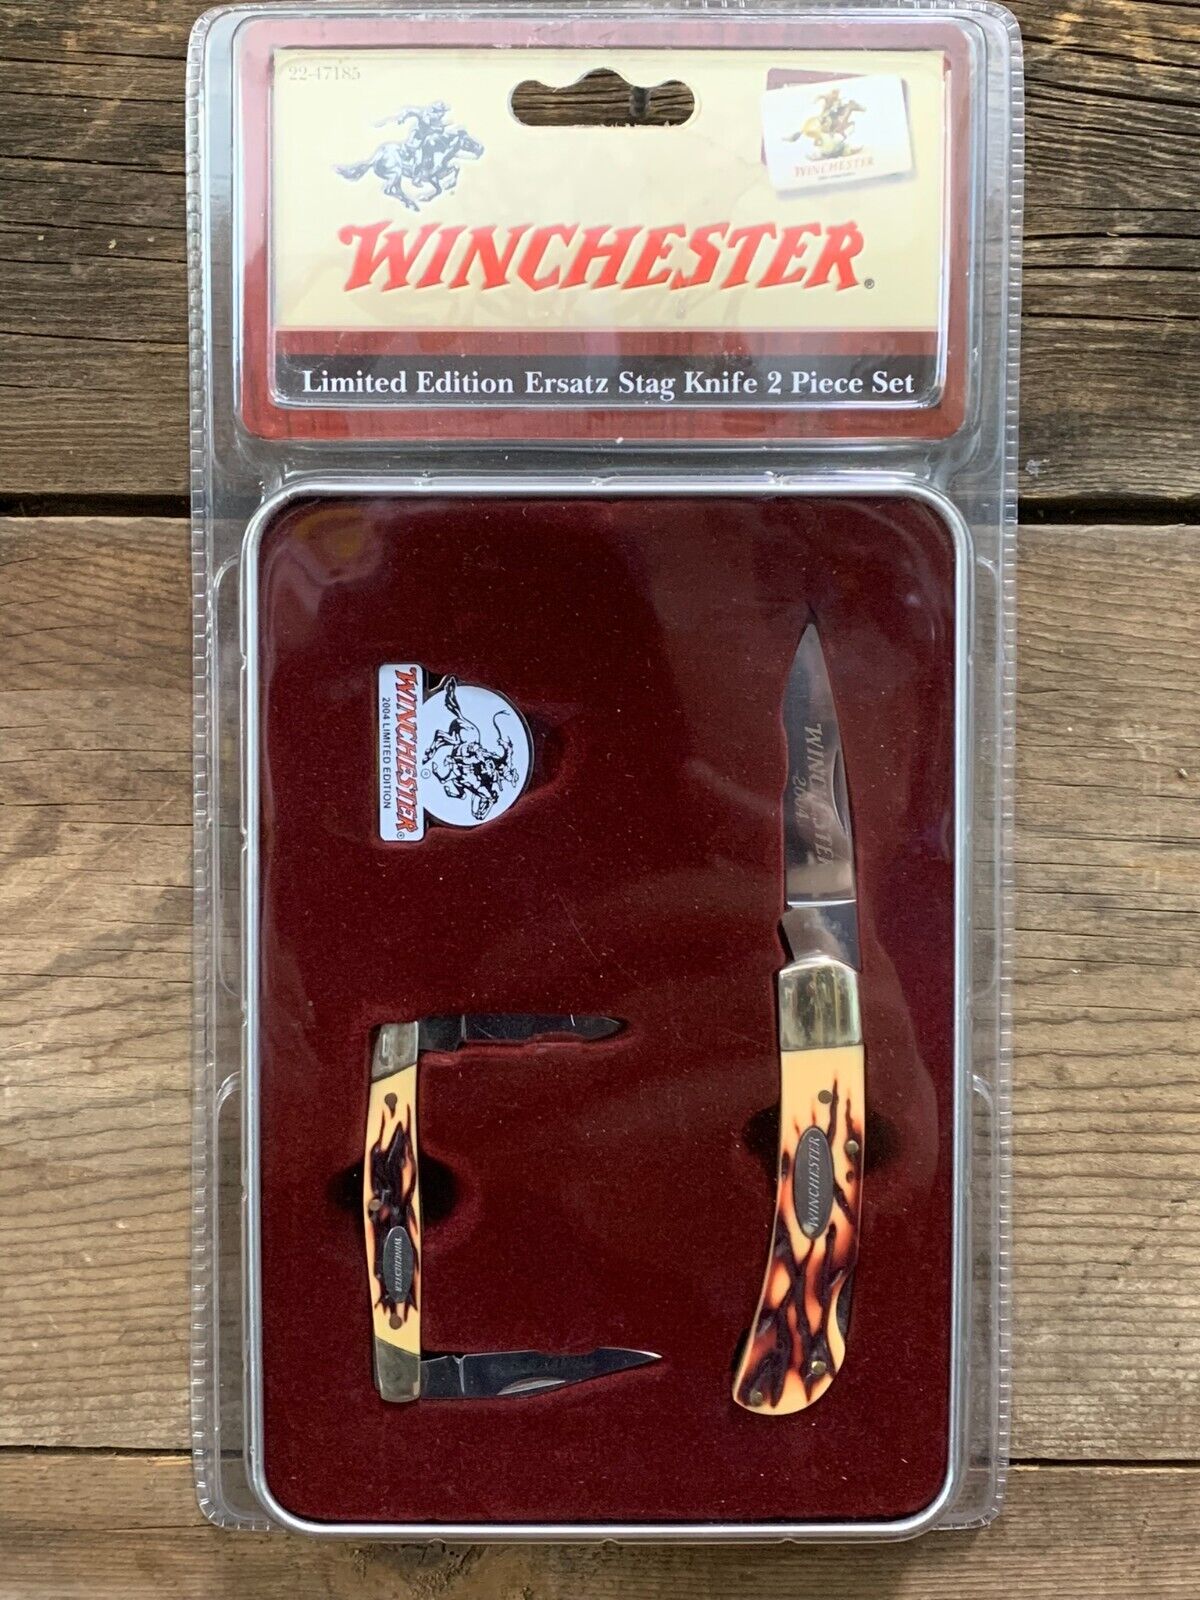 2004 Limited Edition, Winchester Ersatz Stag Knife, 2 Piece Set, NIP